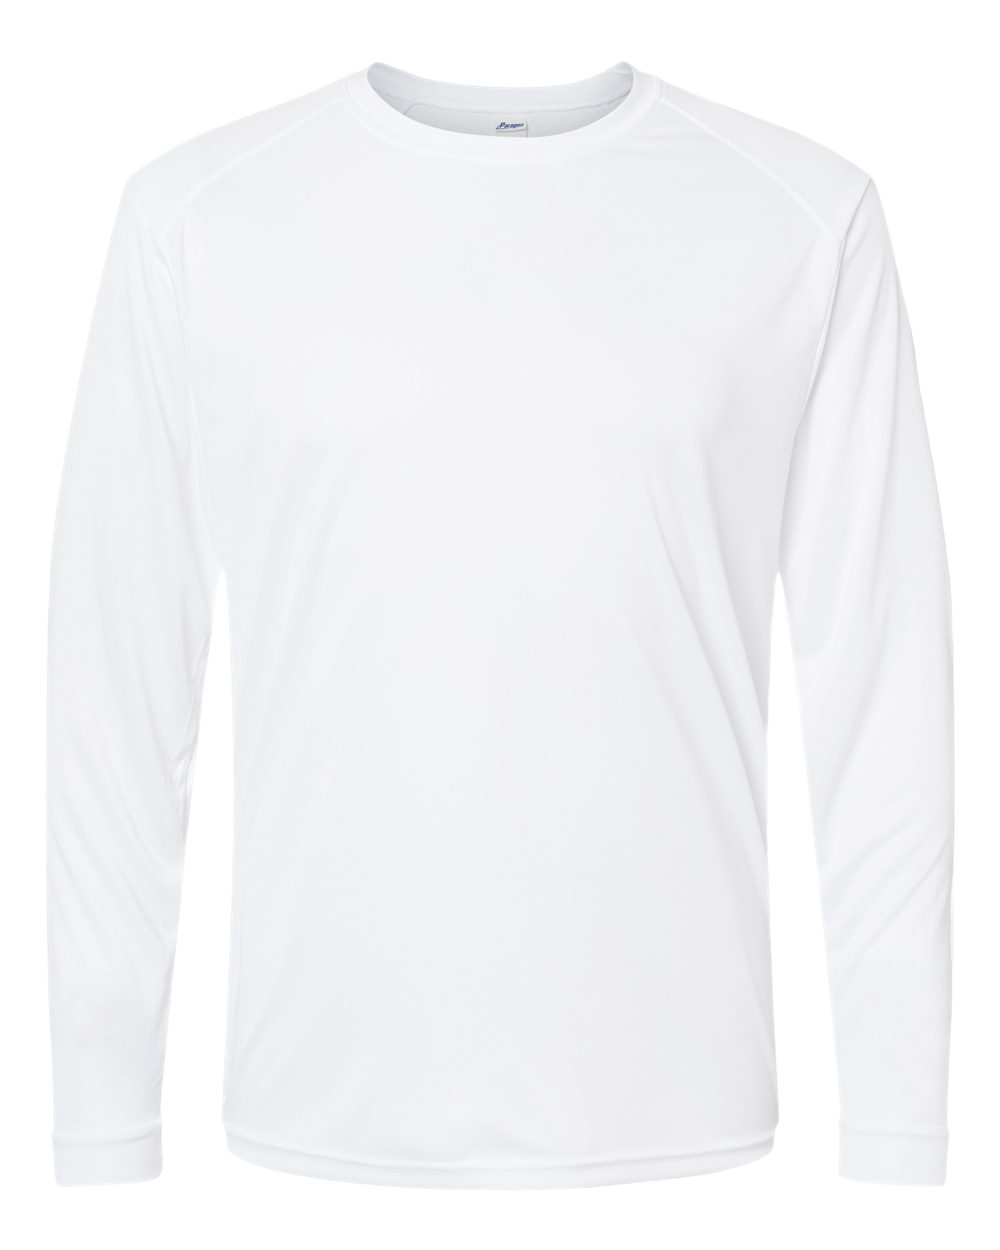 Long Islander Performance Long Sleeve T-Shirt - Paragon 210